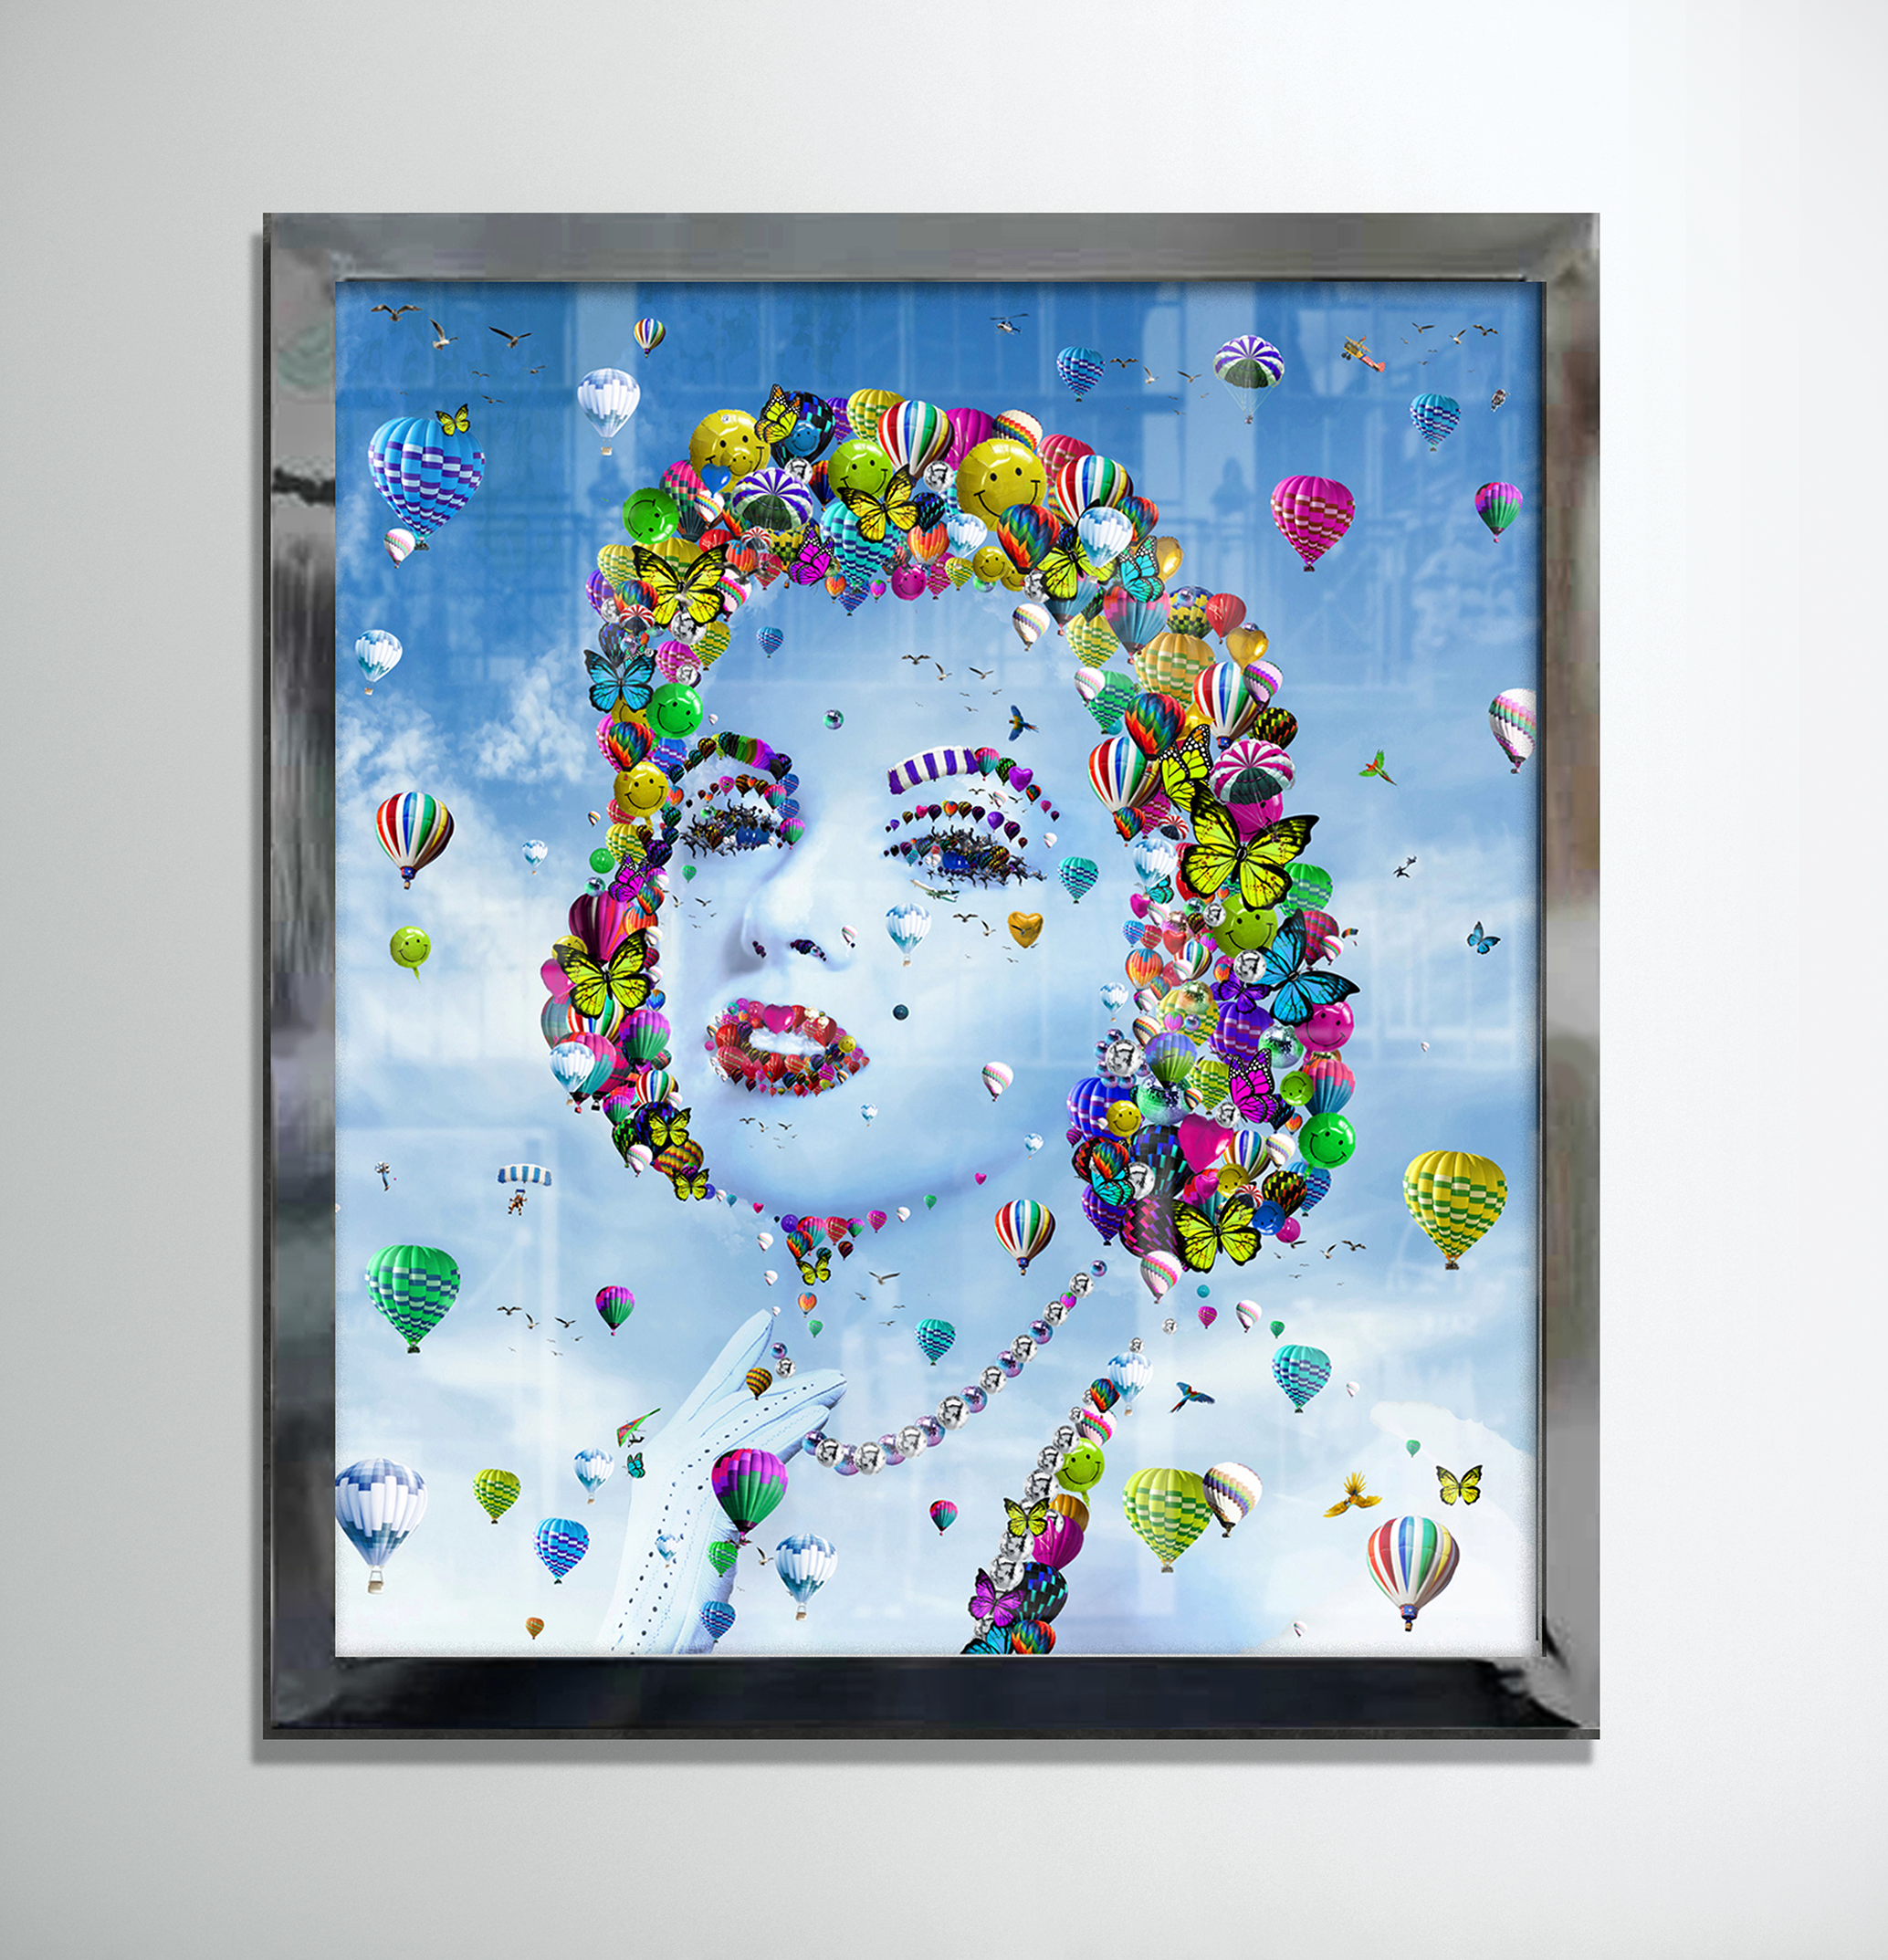 Marilyn Monroe Balloons by Iain Alexander | Limited Ediiton